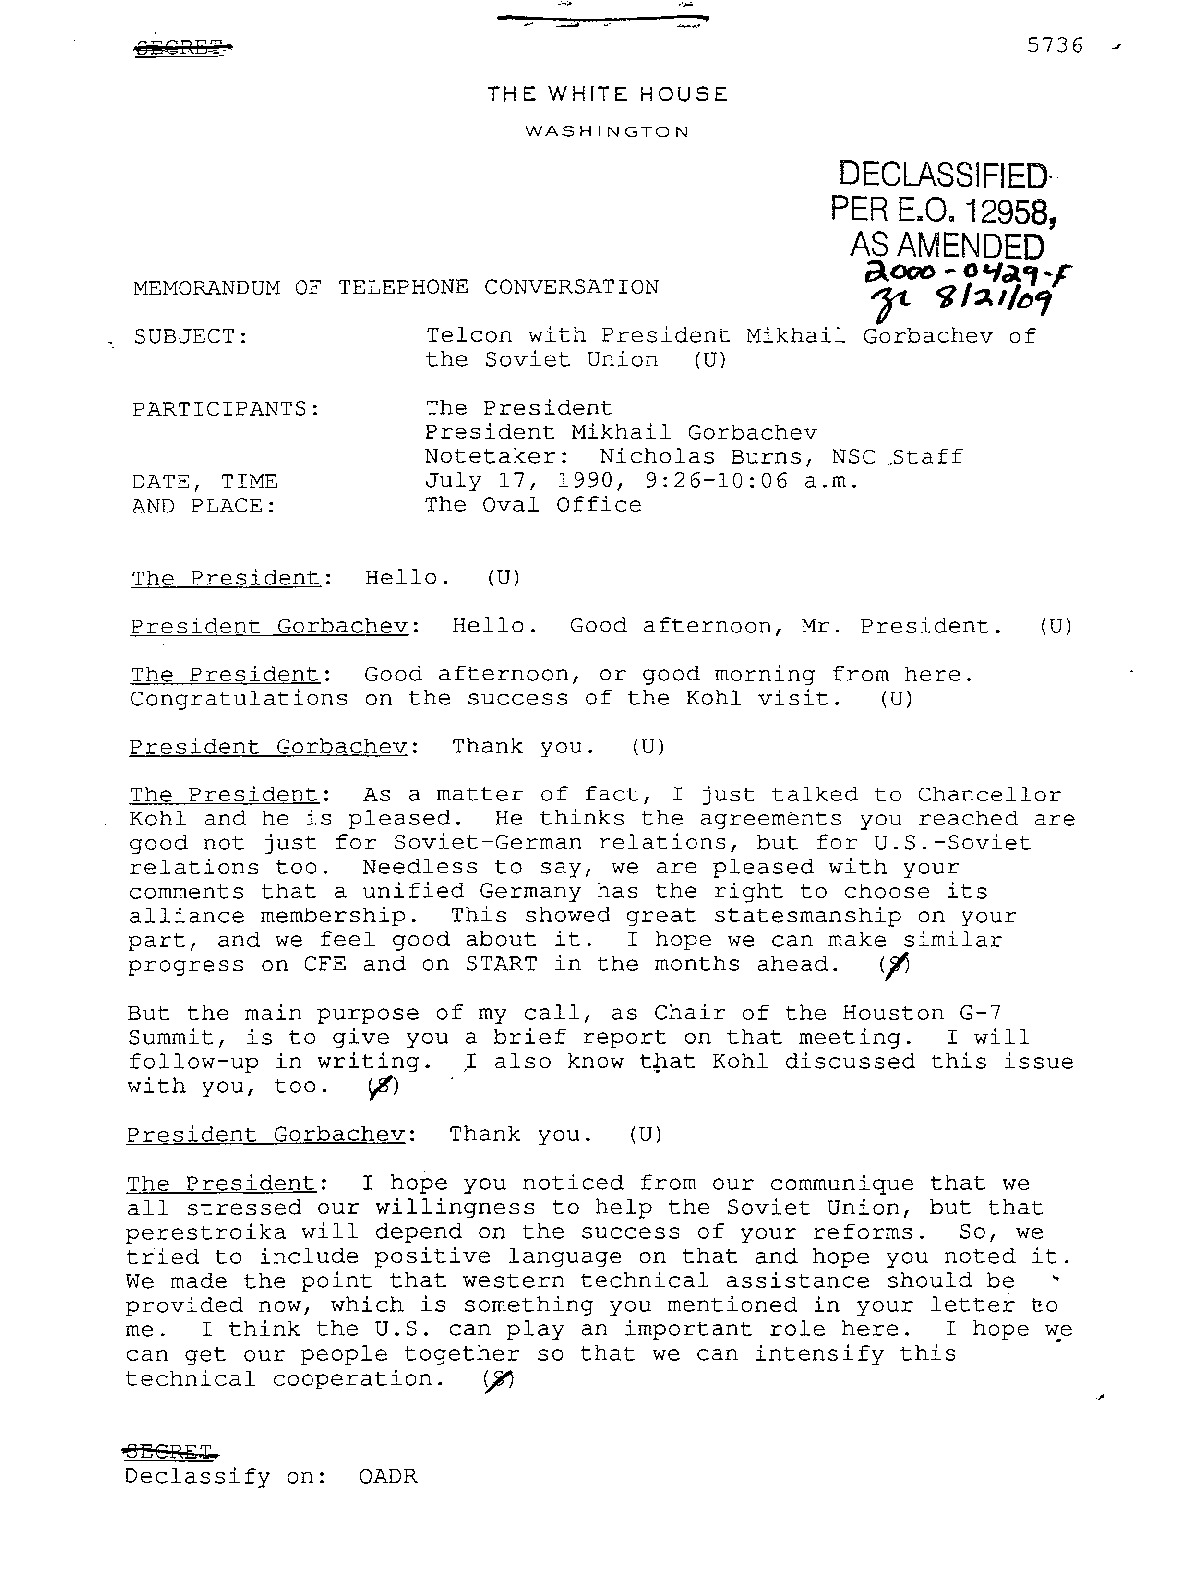 Document-24-Memorandum-of-Telephone-Conversation